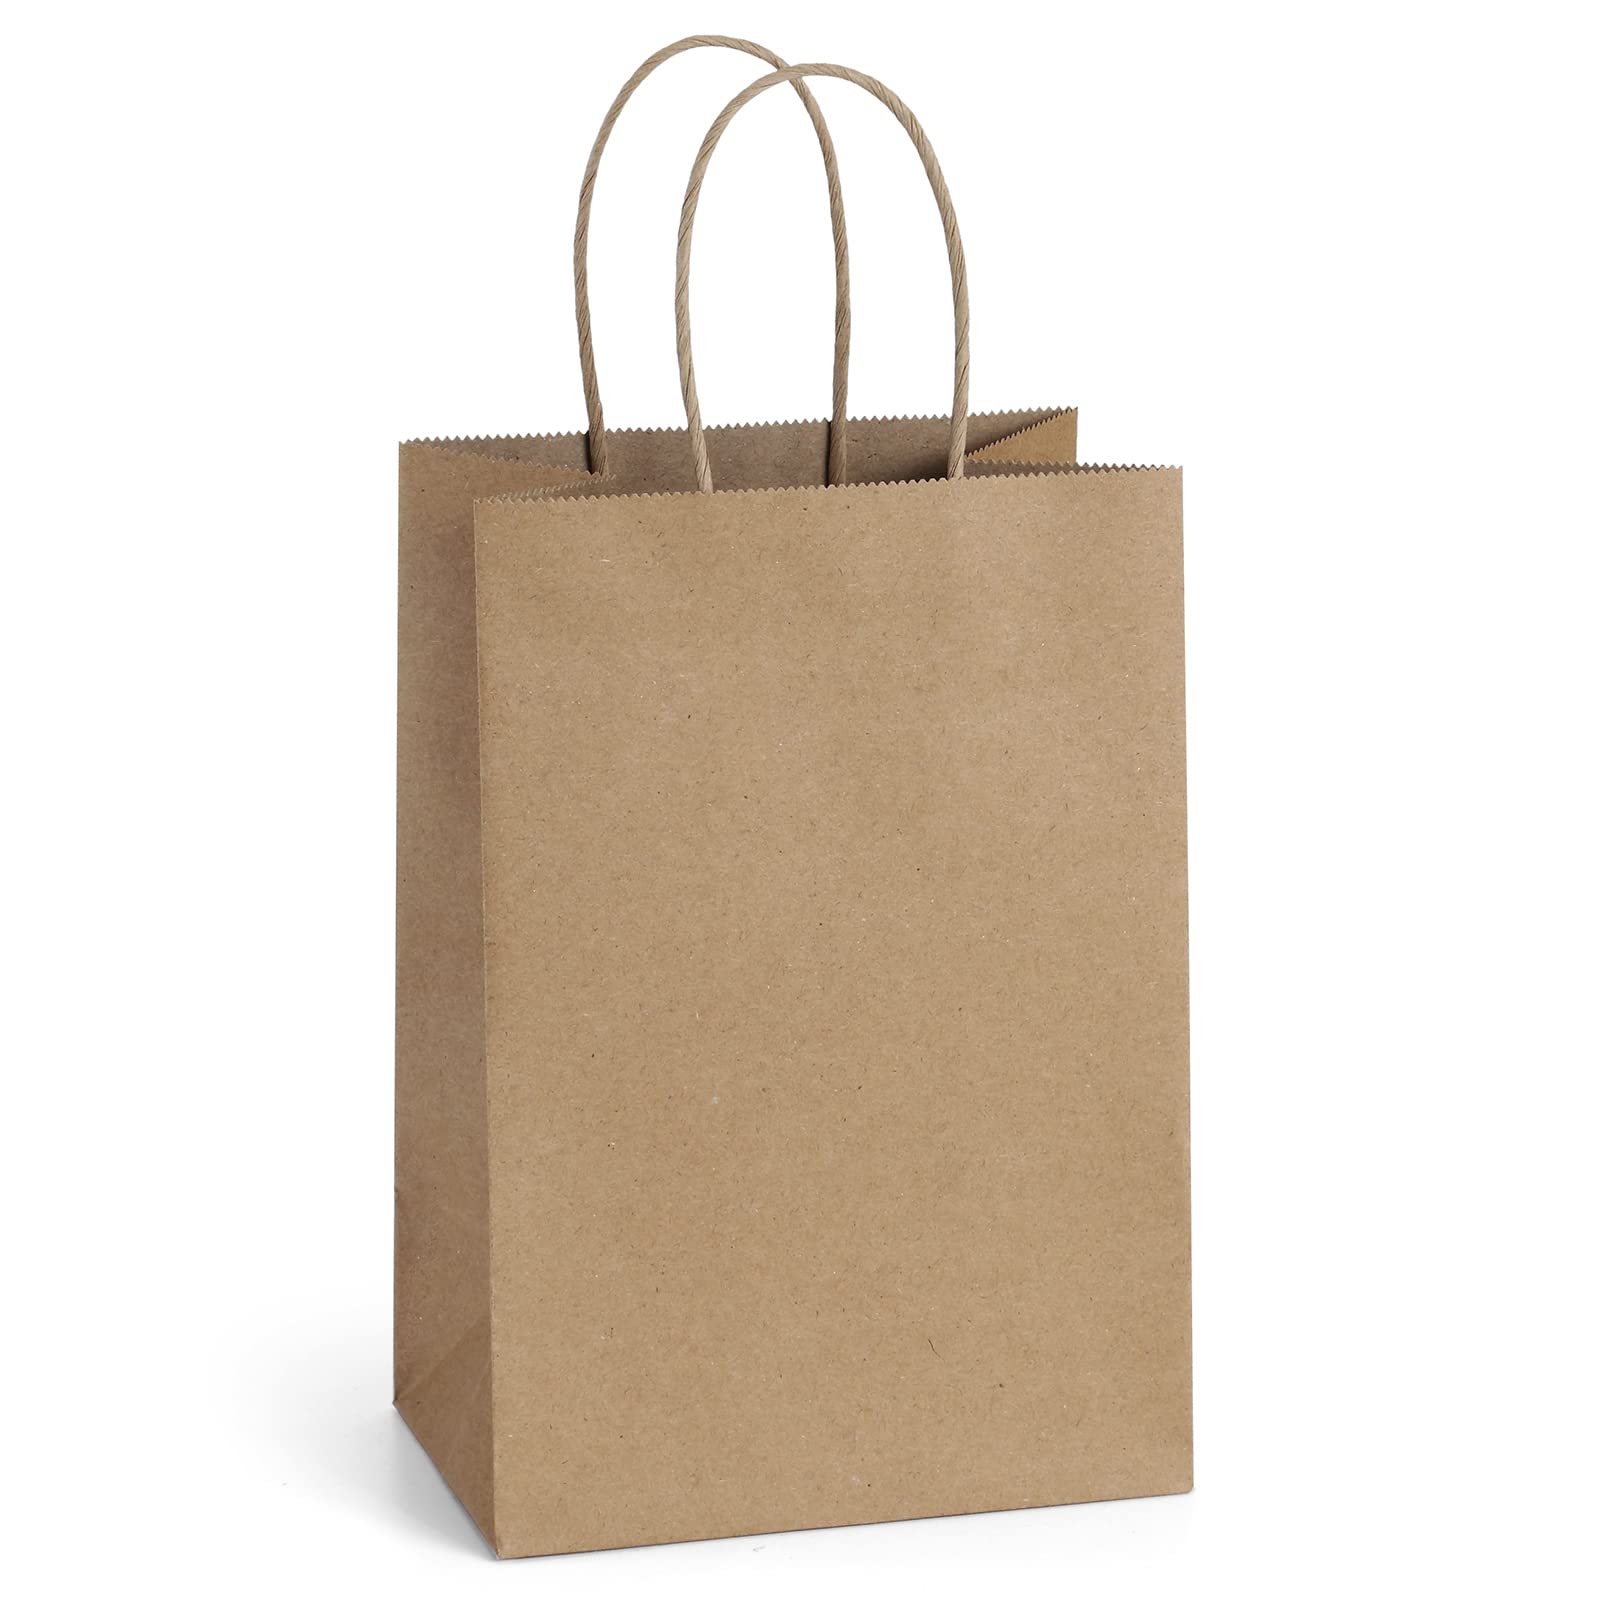 Balenciaga Released Another Expensive Shopping Bag - Balenciaga Leather  Shopping Bag Costs $1,820